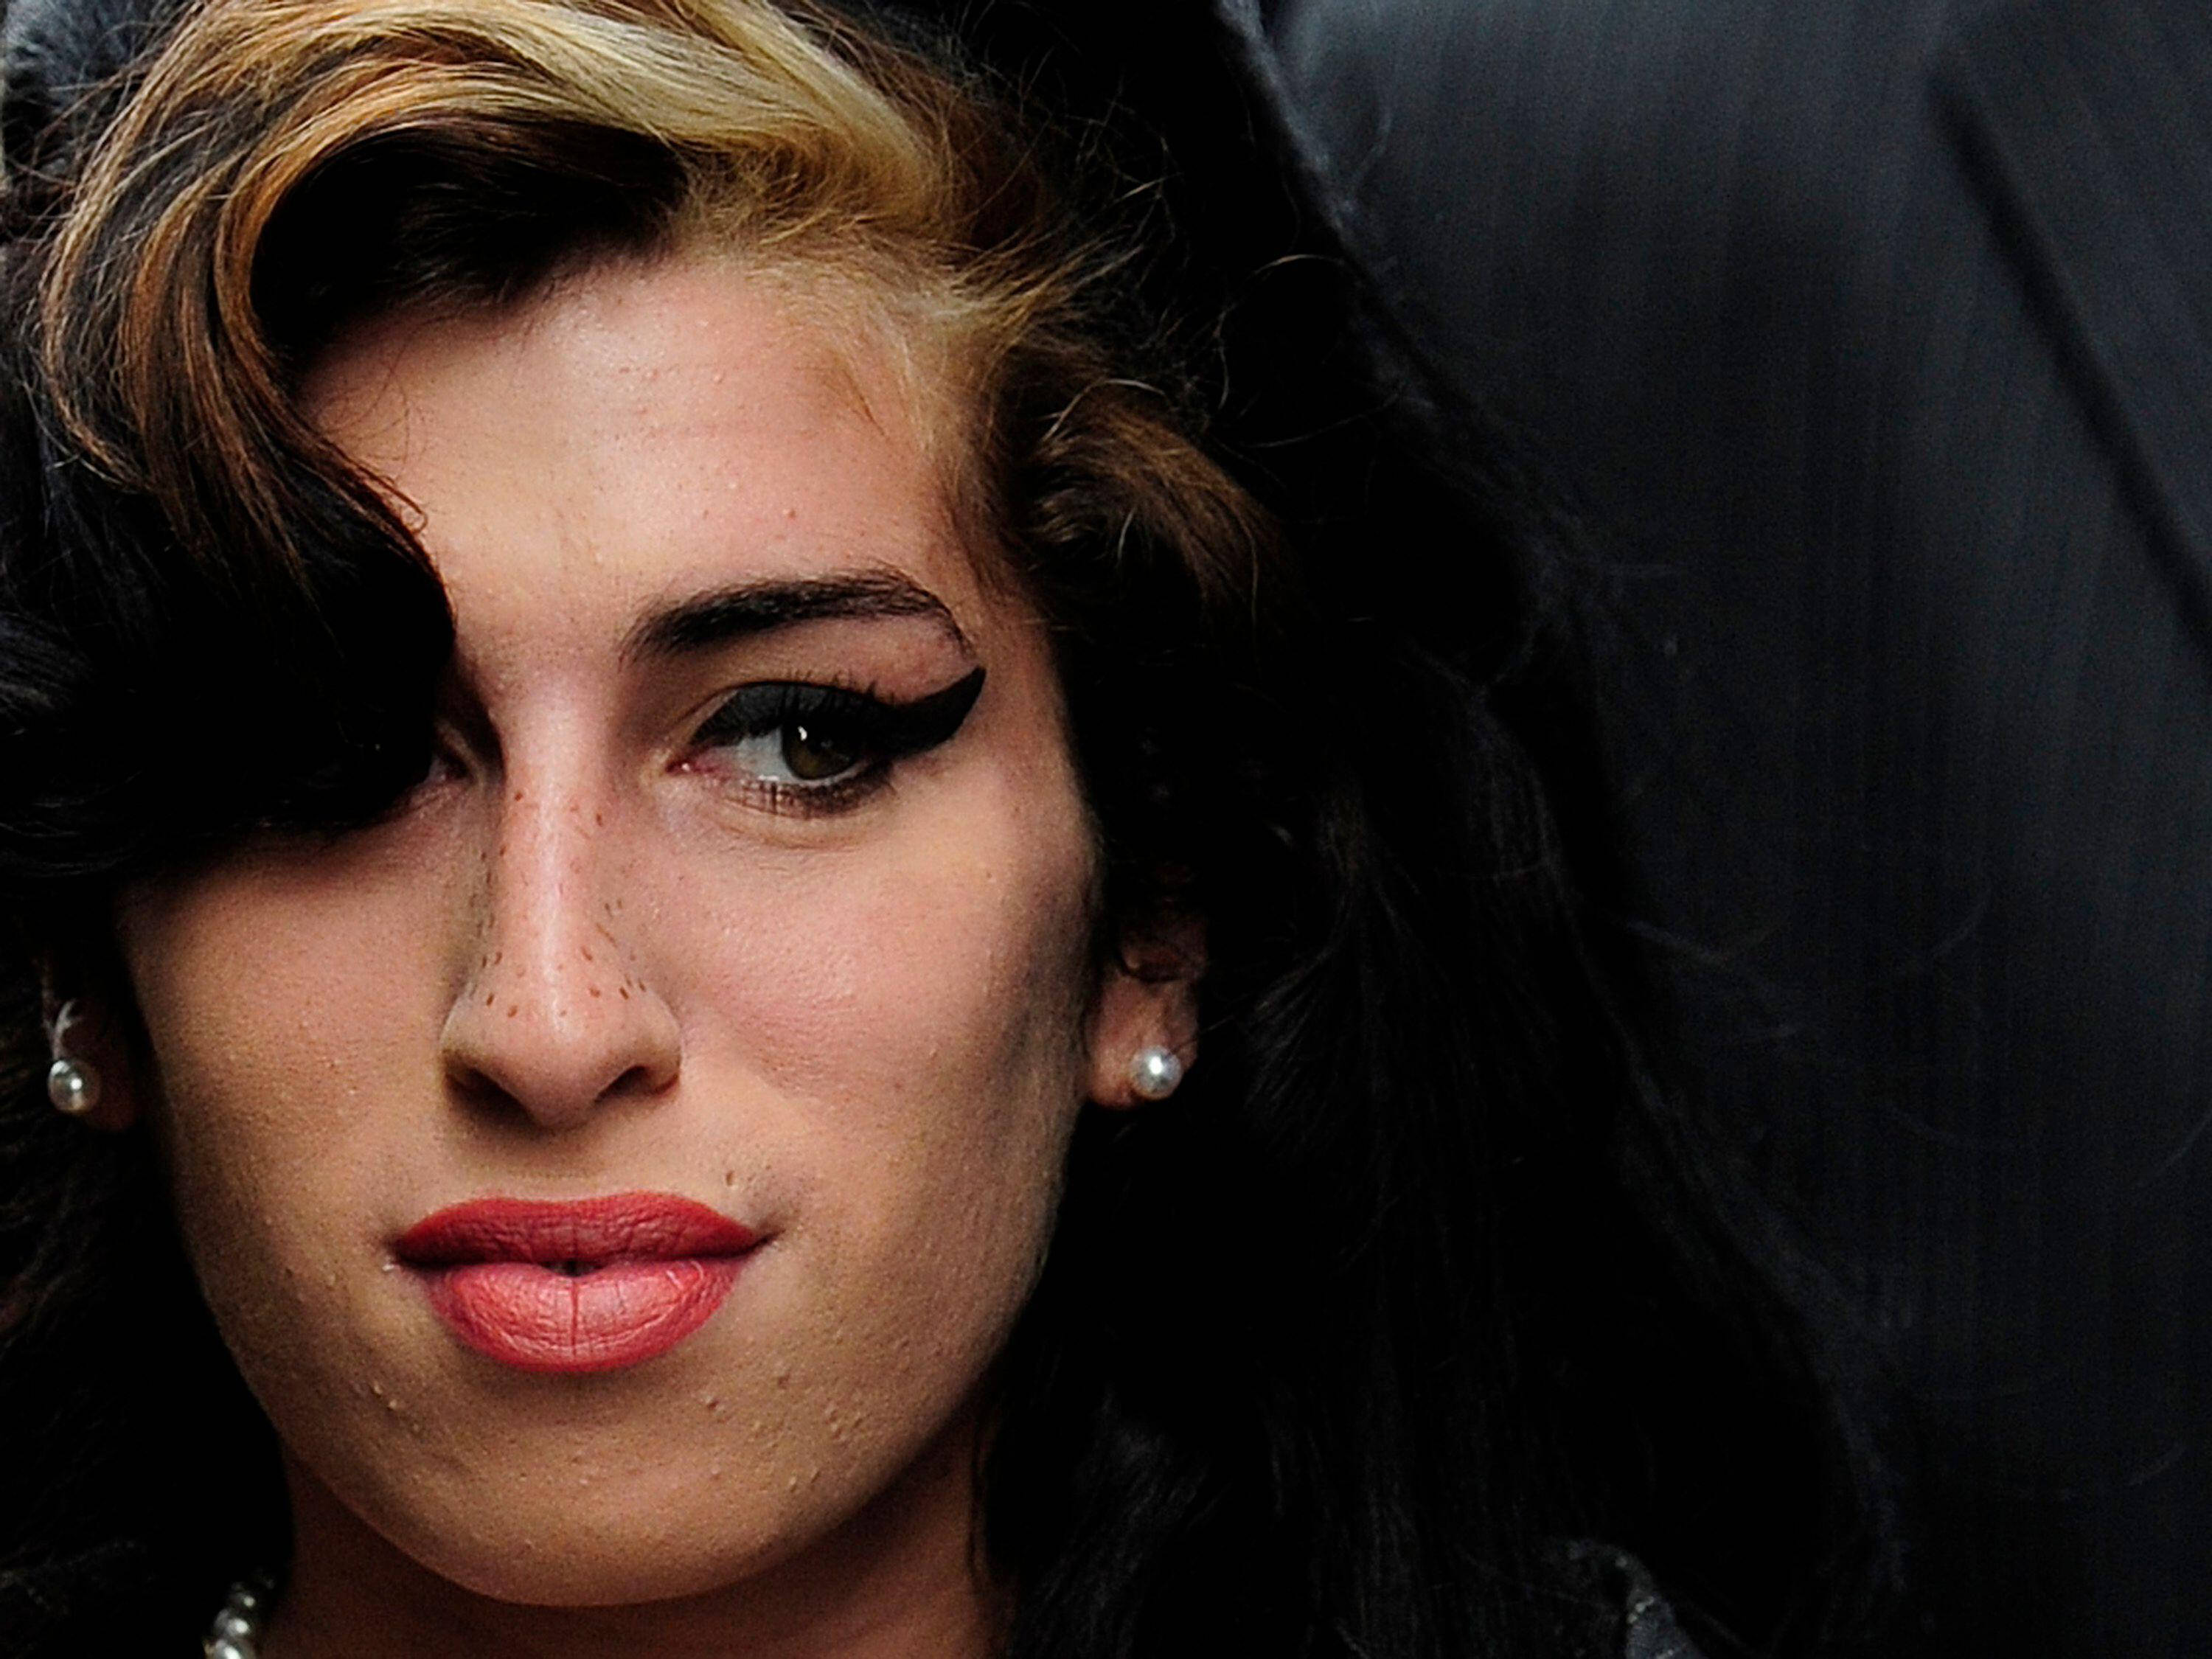 Back to Black   Amy Winehouse British